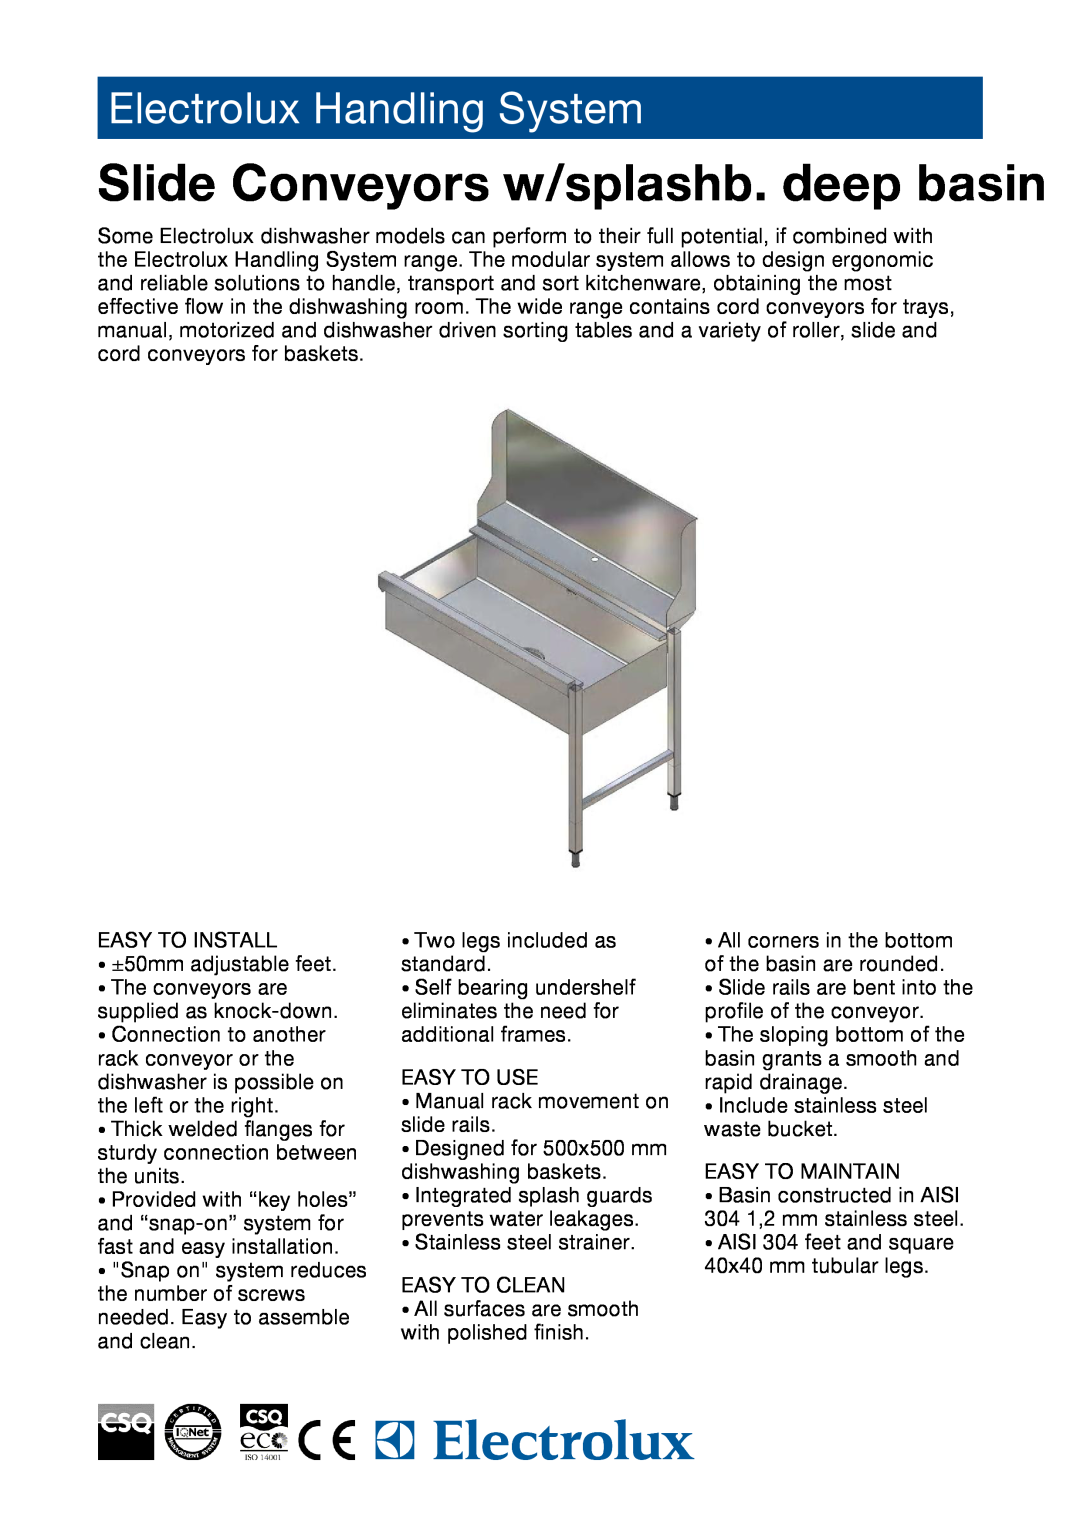 Electrolux SS-6 manual Slide Conveyors w/splashb. deep basin, Electrolux Handling System 